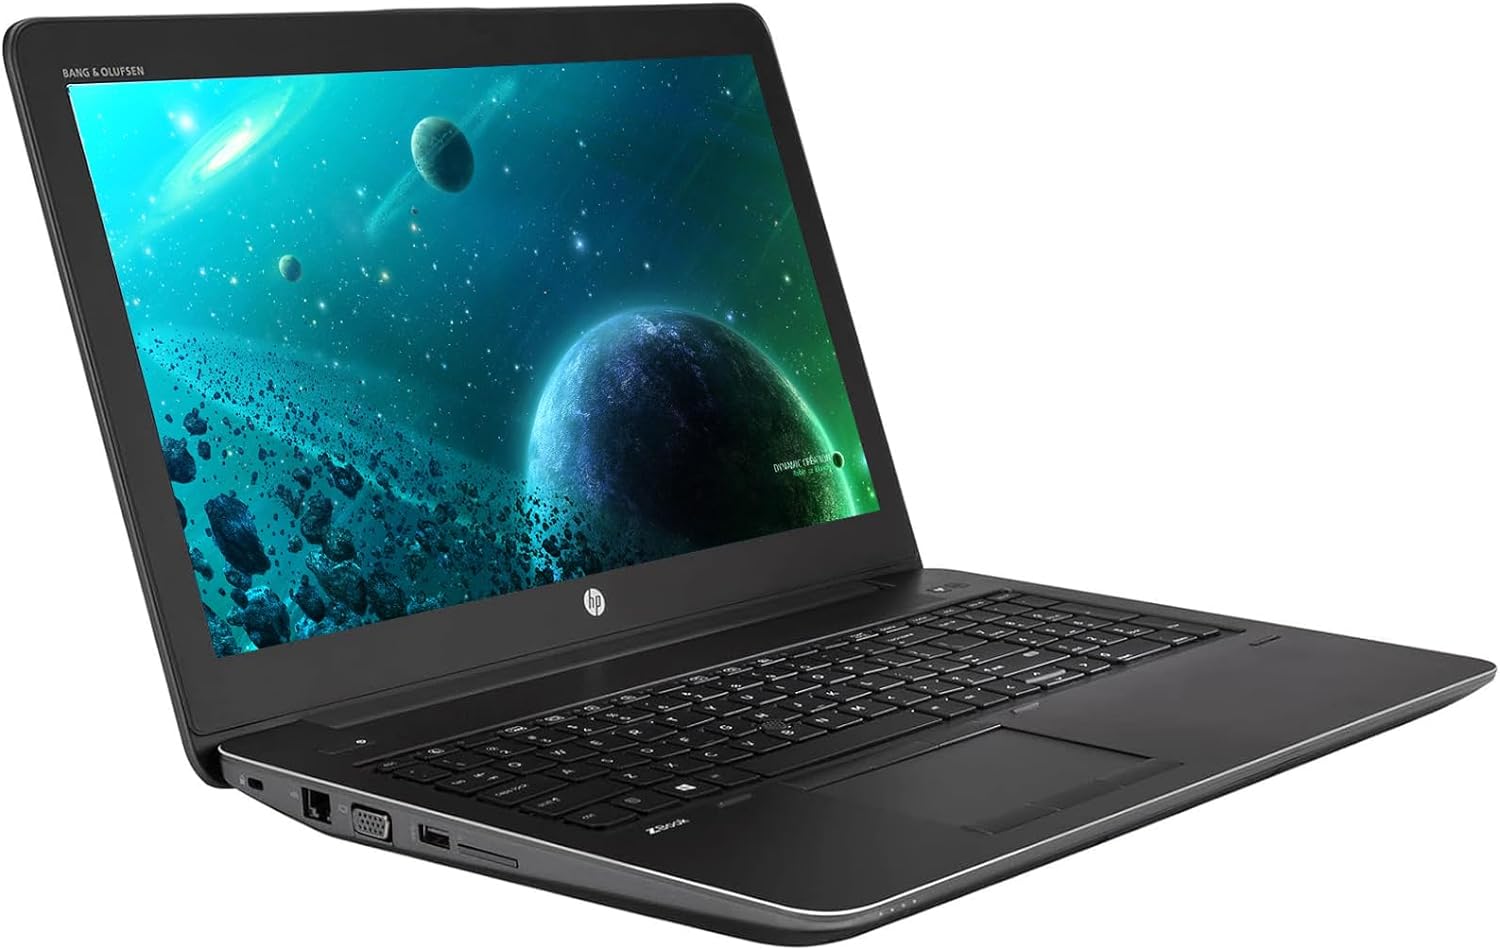 HP ZBook 15 G3 Workstation Laptop, 15.6" FHD (1920x1080) Screen, Core i7-6700HQ 2.6GHz, Up to 3.5GHz, AMD FirePro W5170M 2GB, 16GB RAM, 512GB SSD, Backlit Keyboard, Windows 10Pro